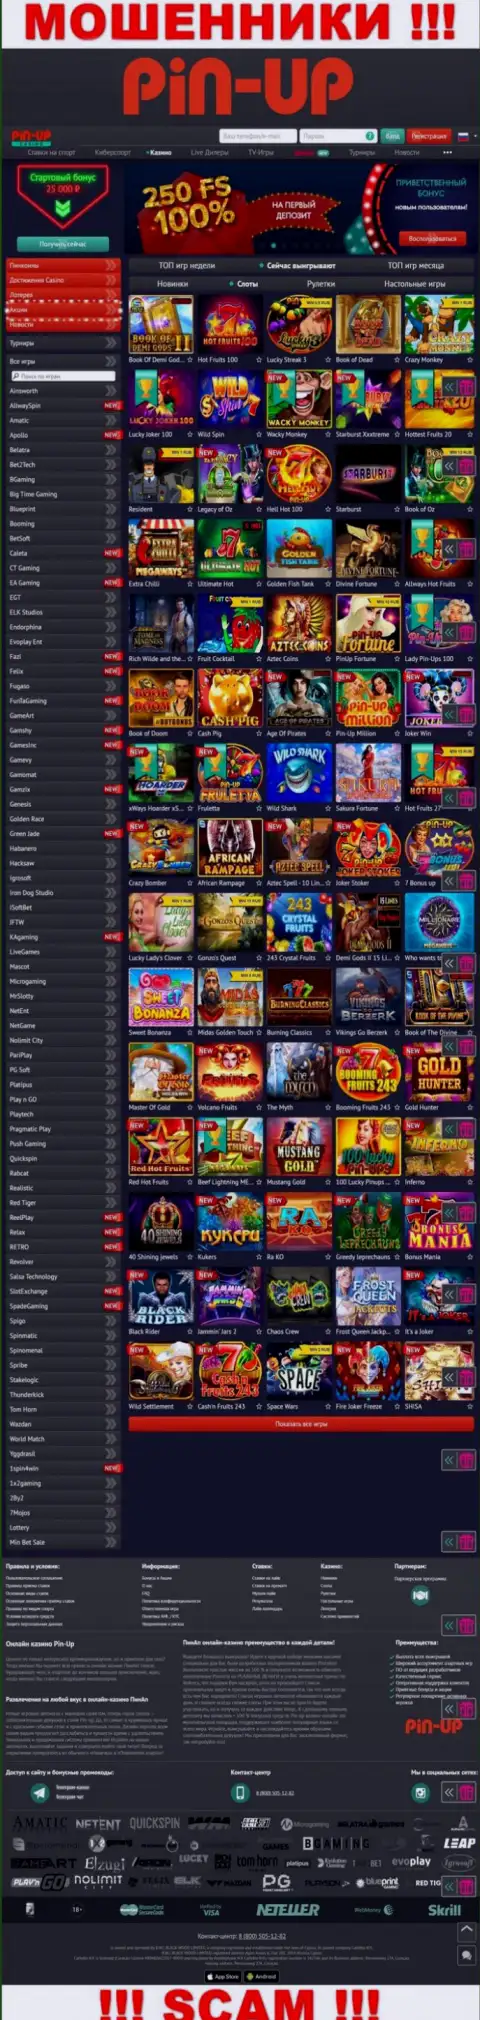 Pin-Up Casino - это официальный сайт аферистов Pin Up Casino